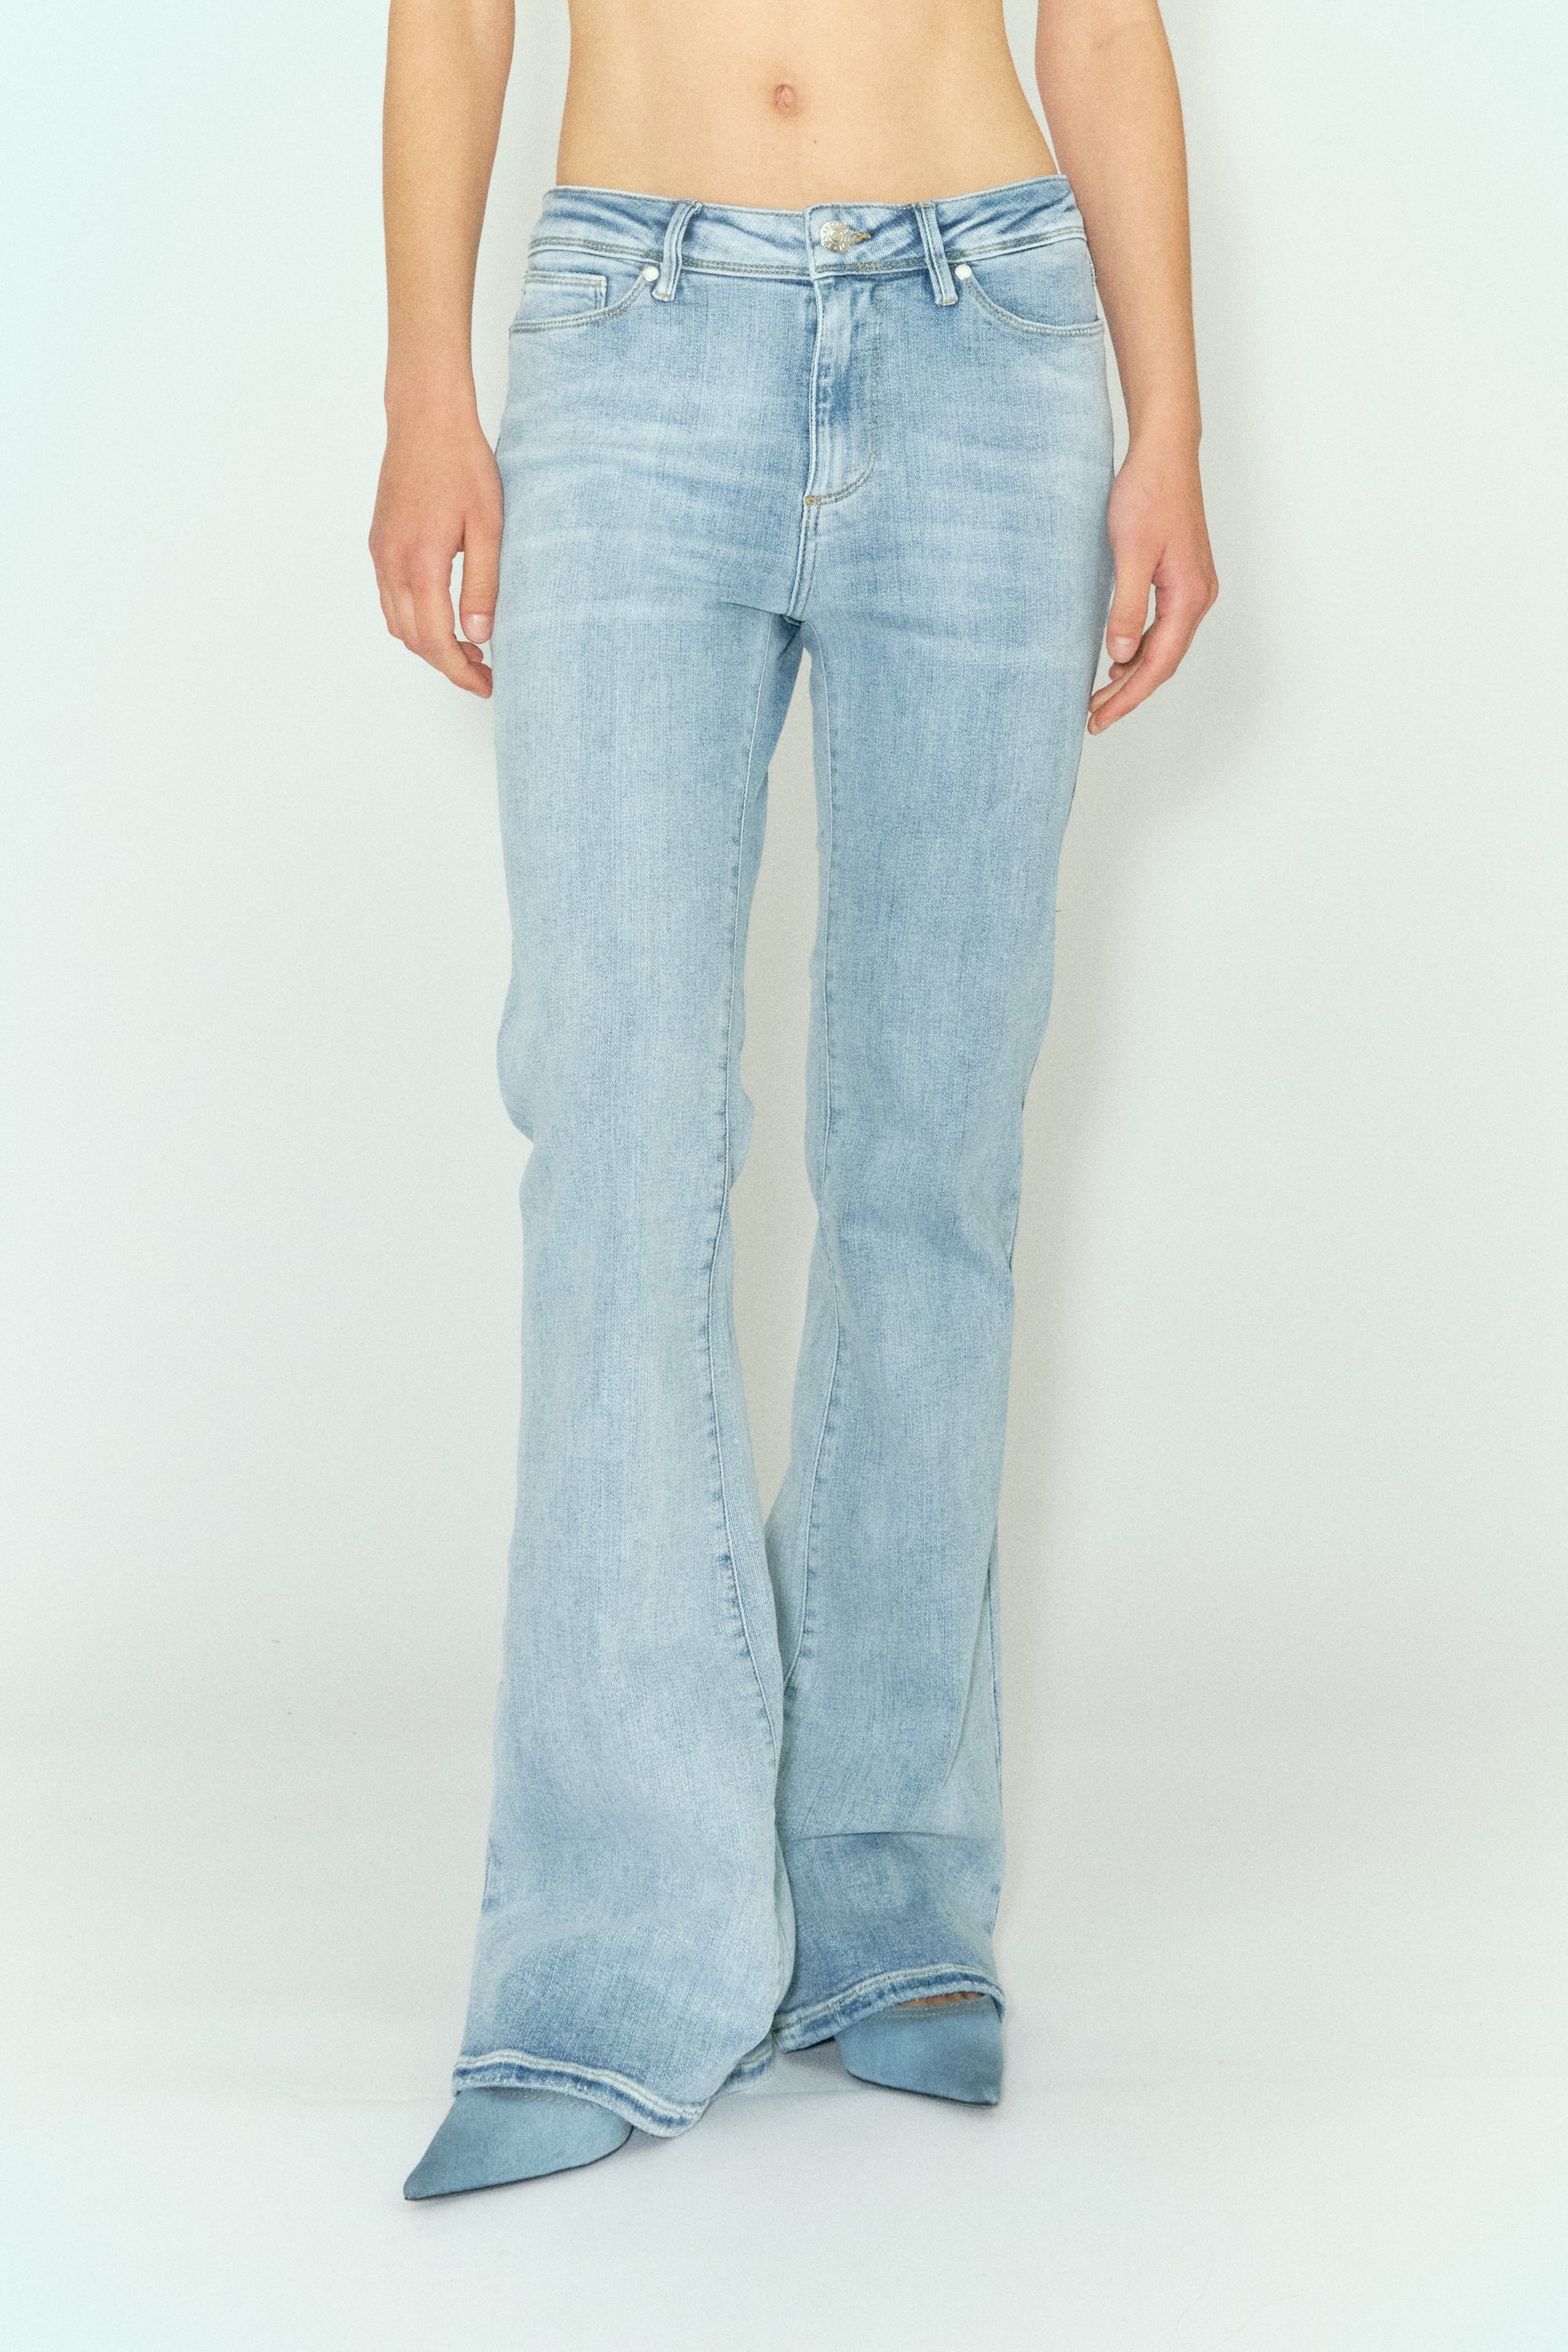 Tomorrow TMRW Albert Jeans - Pula Jeans & Pants 51 Denim Blue